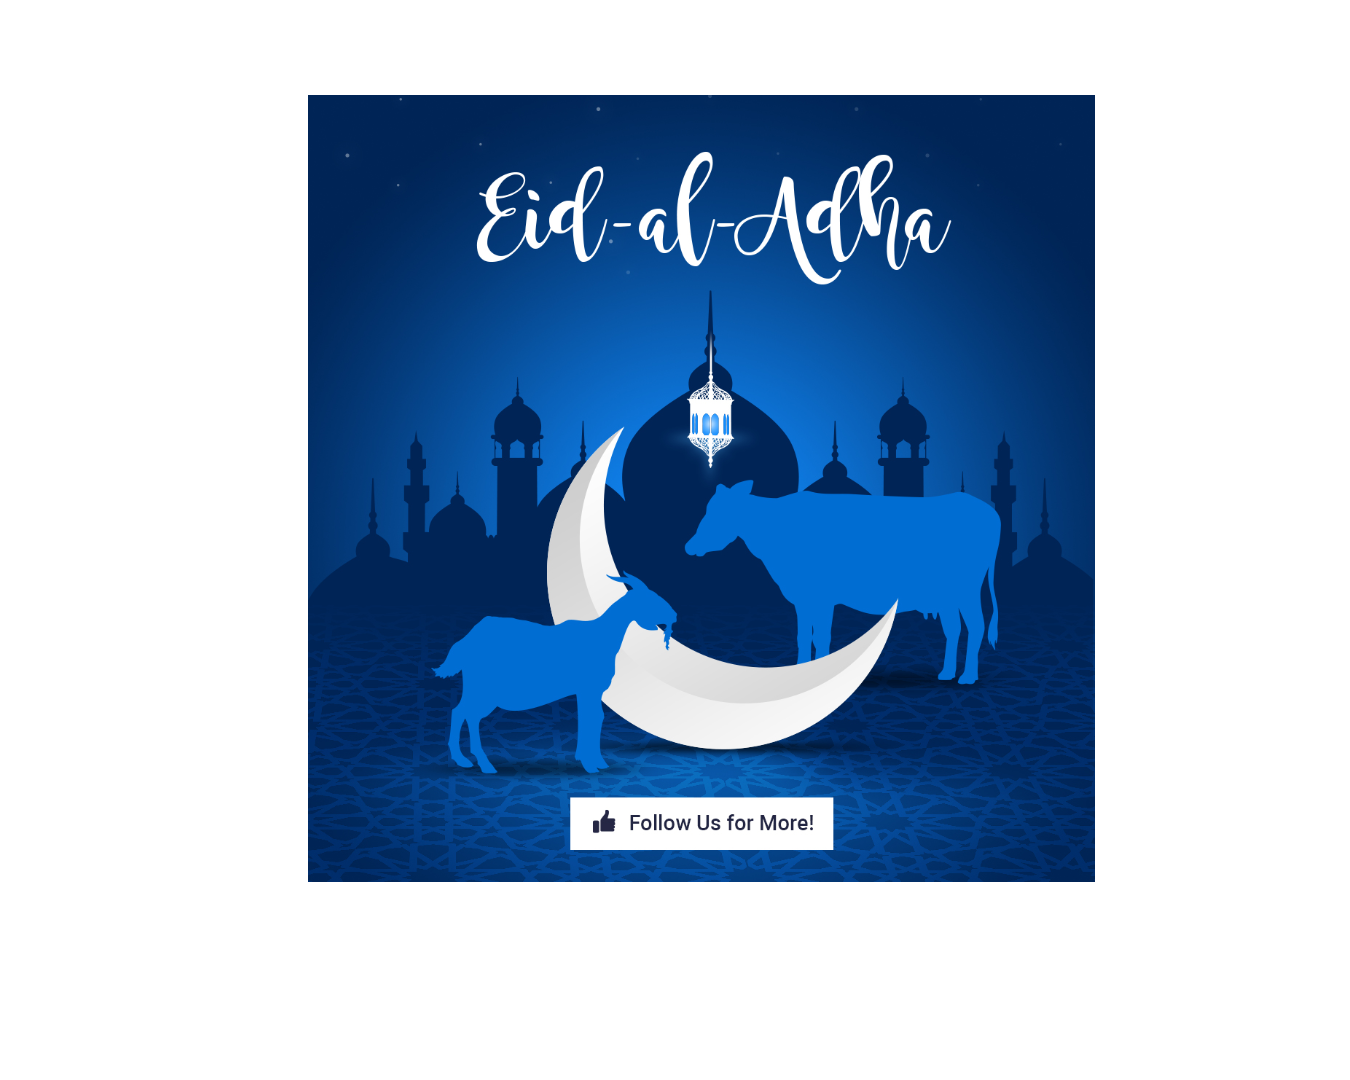 Happy Eid alAdha celebration! West Orlando Internal Medicine